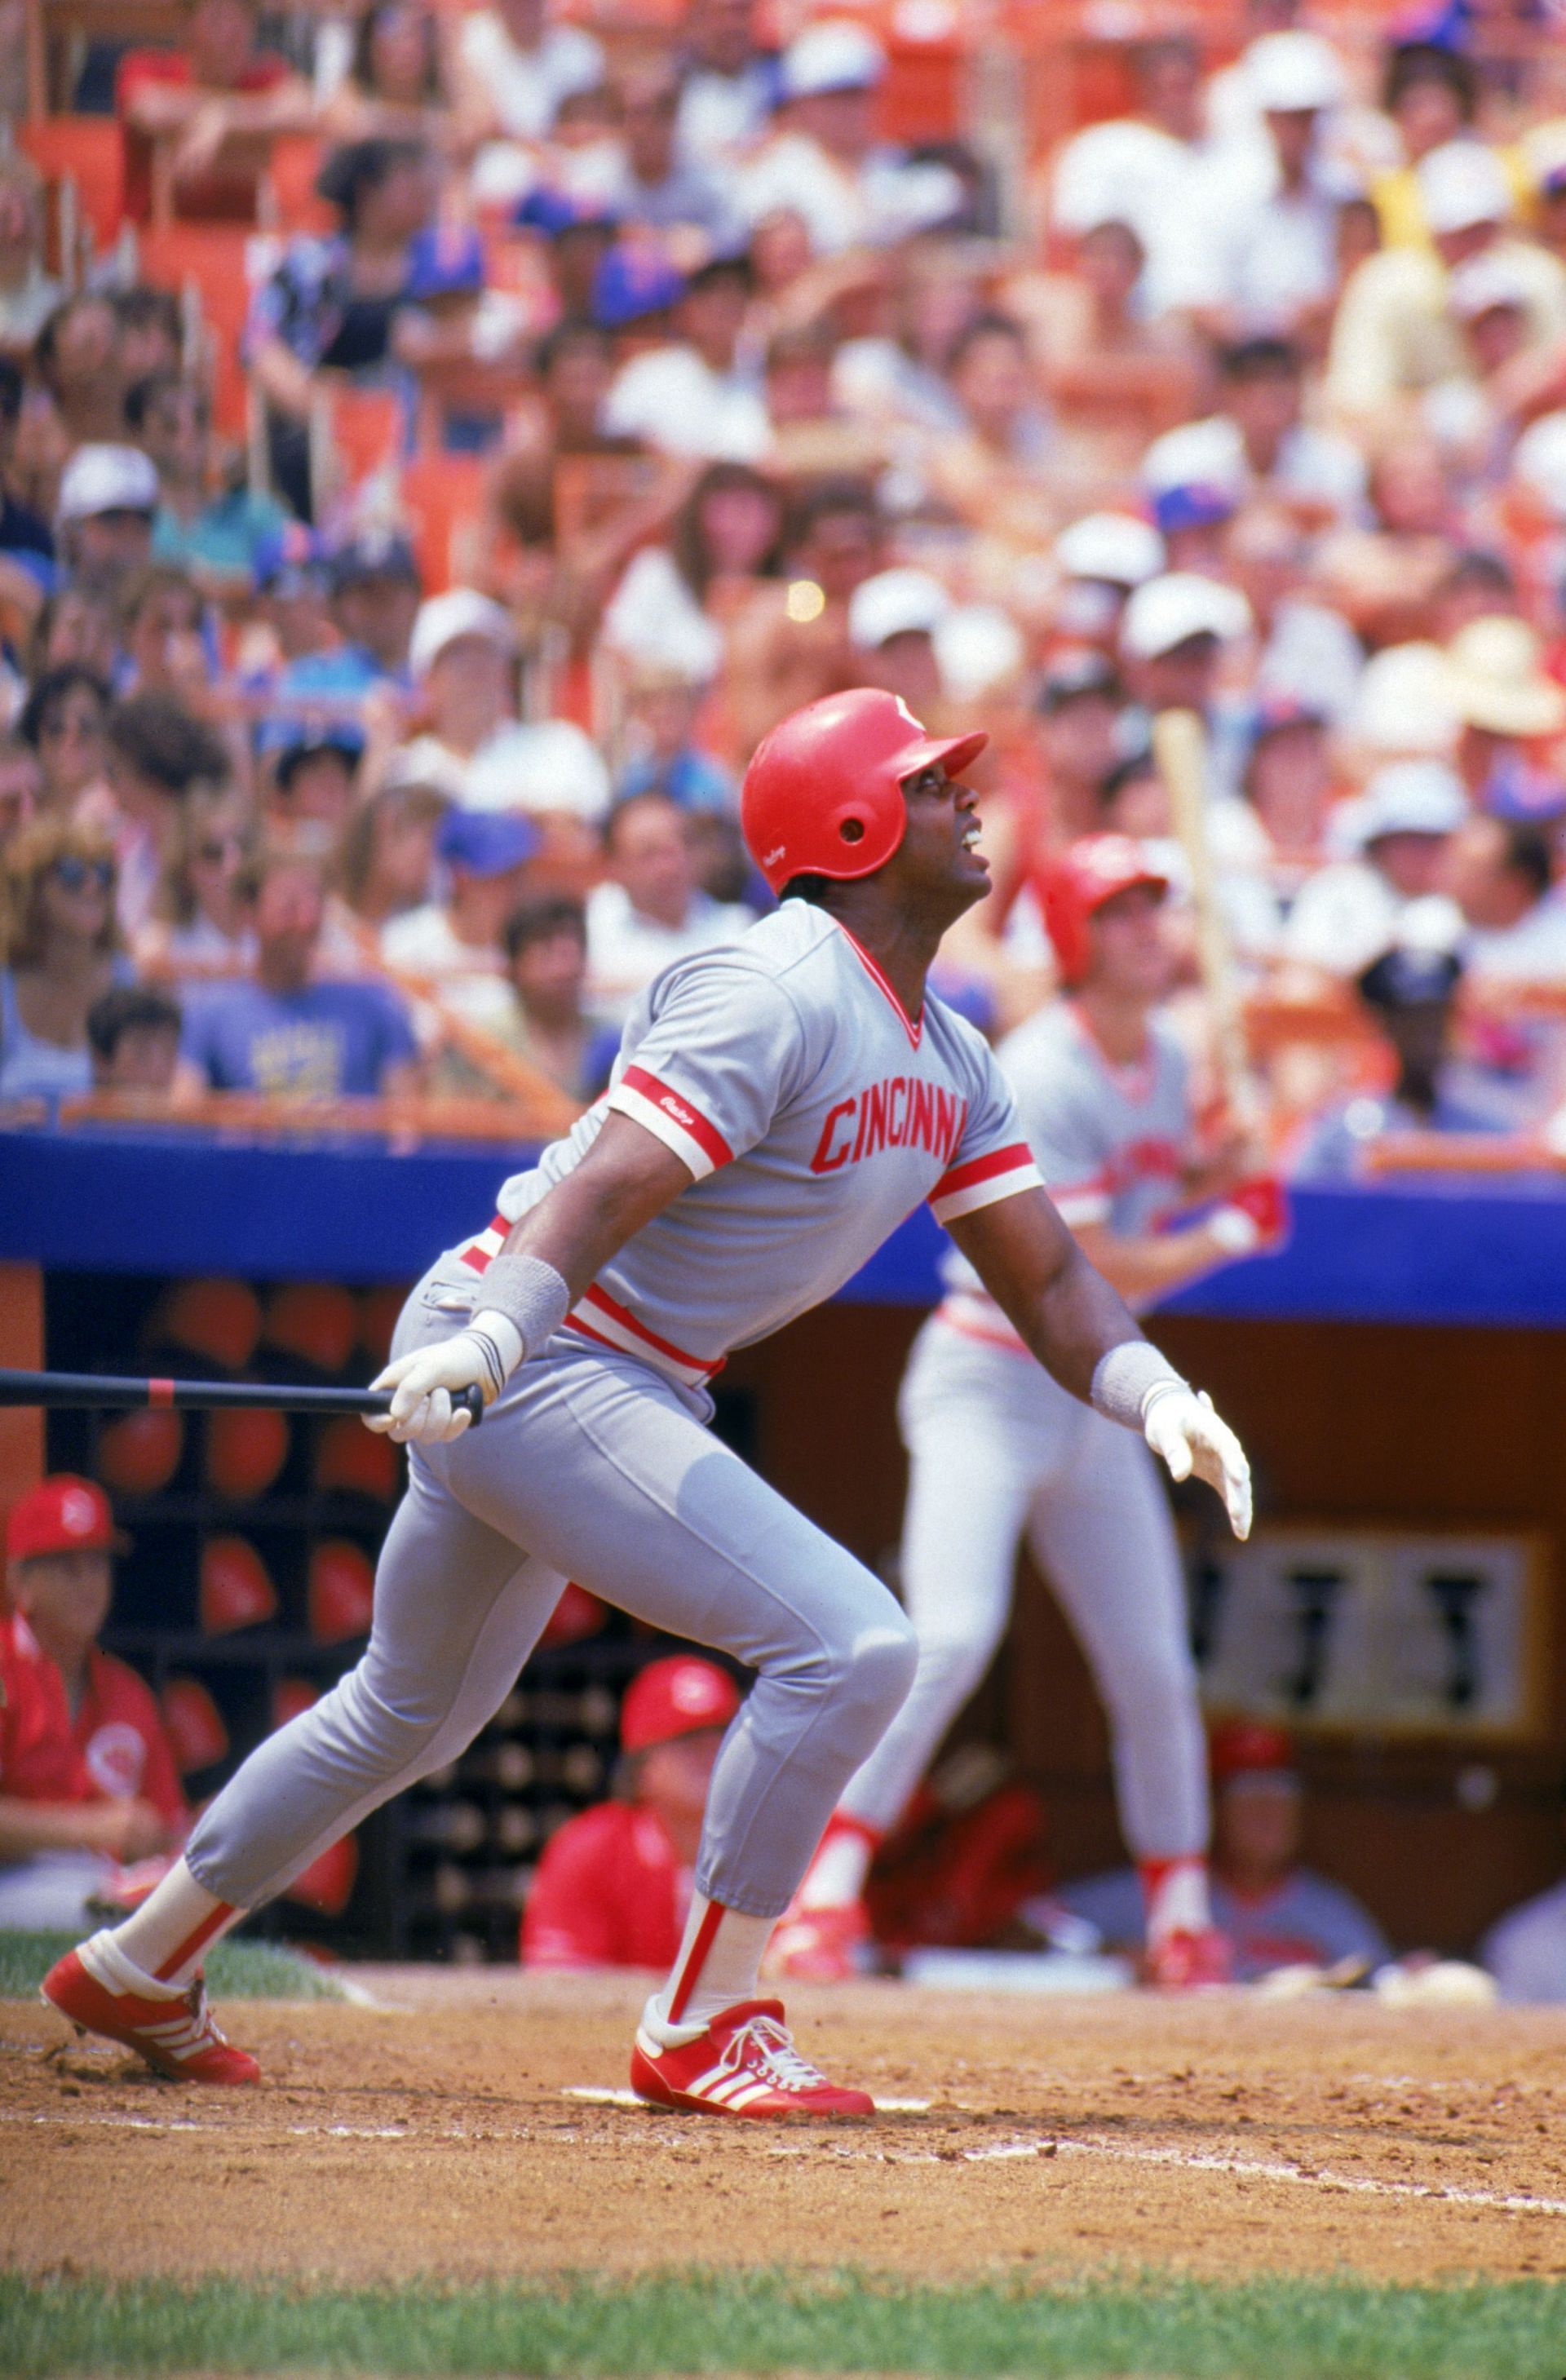 MLB Rewind: Throwback to 1985 when Cincinnati Reds star slugger